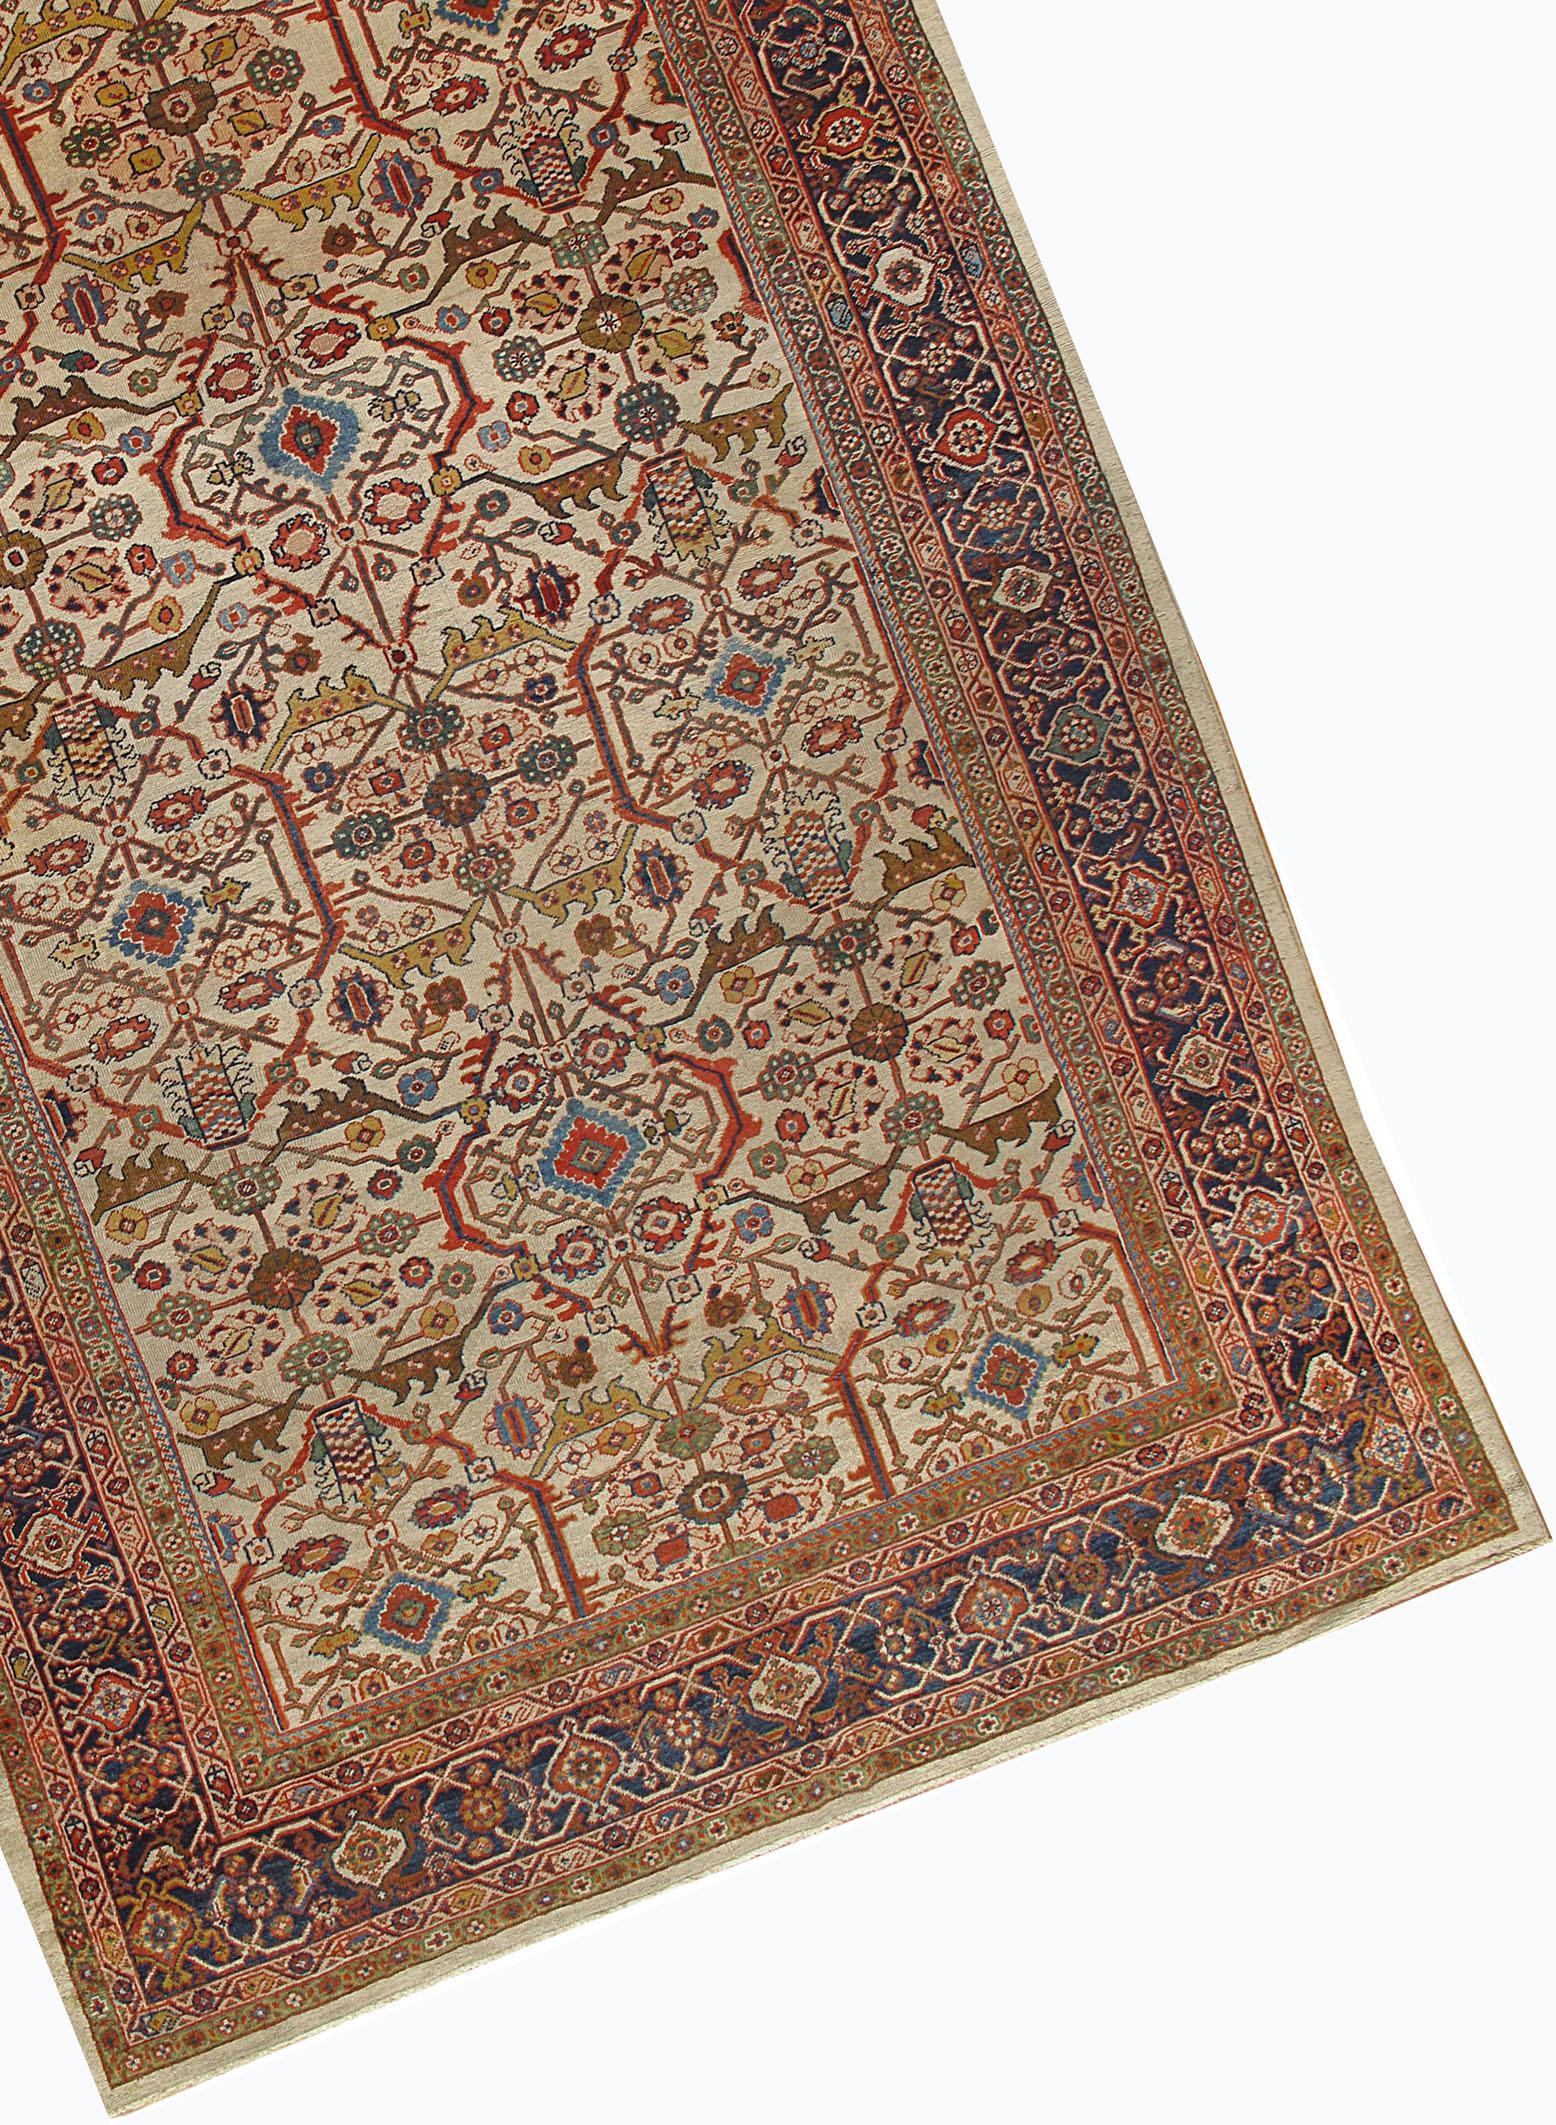 Hand-Woven Antique Sultanabad Rug Carpet, circa 1890  8'4 x 13'4